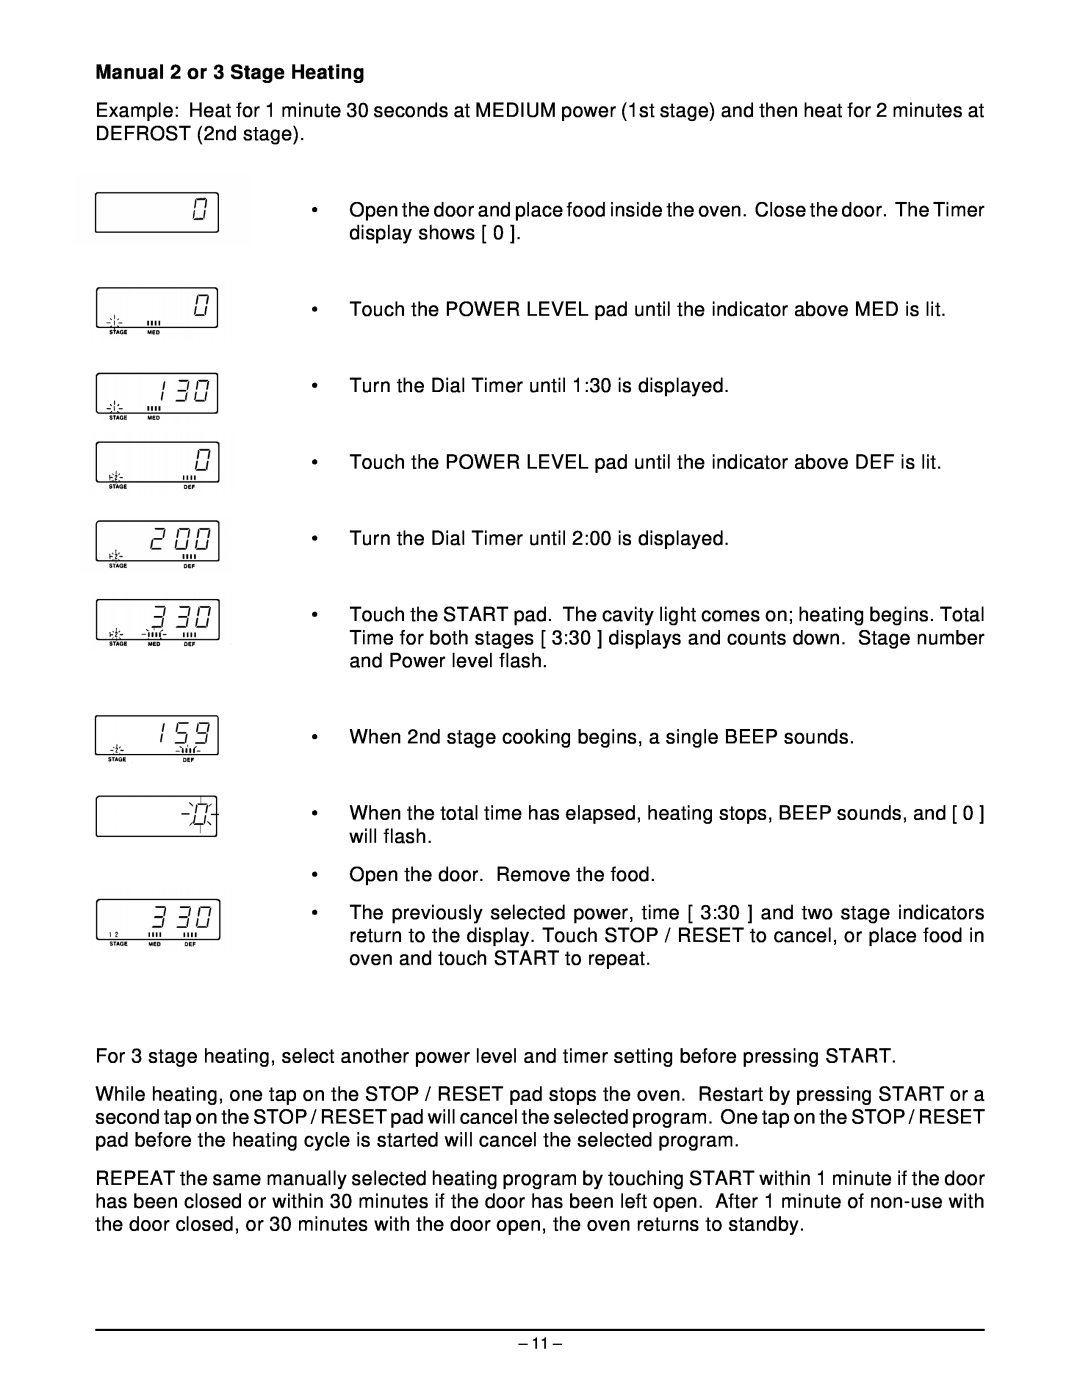 Hobart HM1600 manual Manual 2 or 3 Stage Heating 